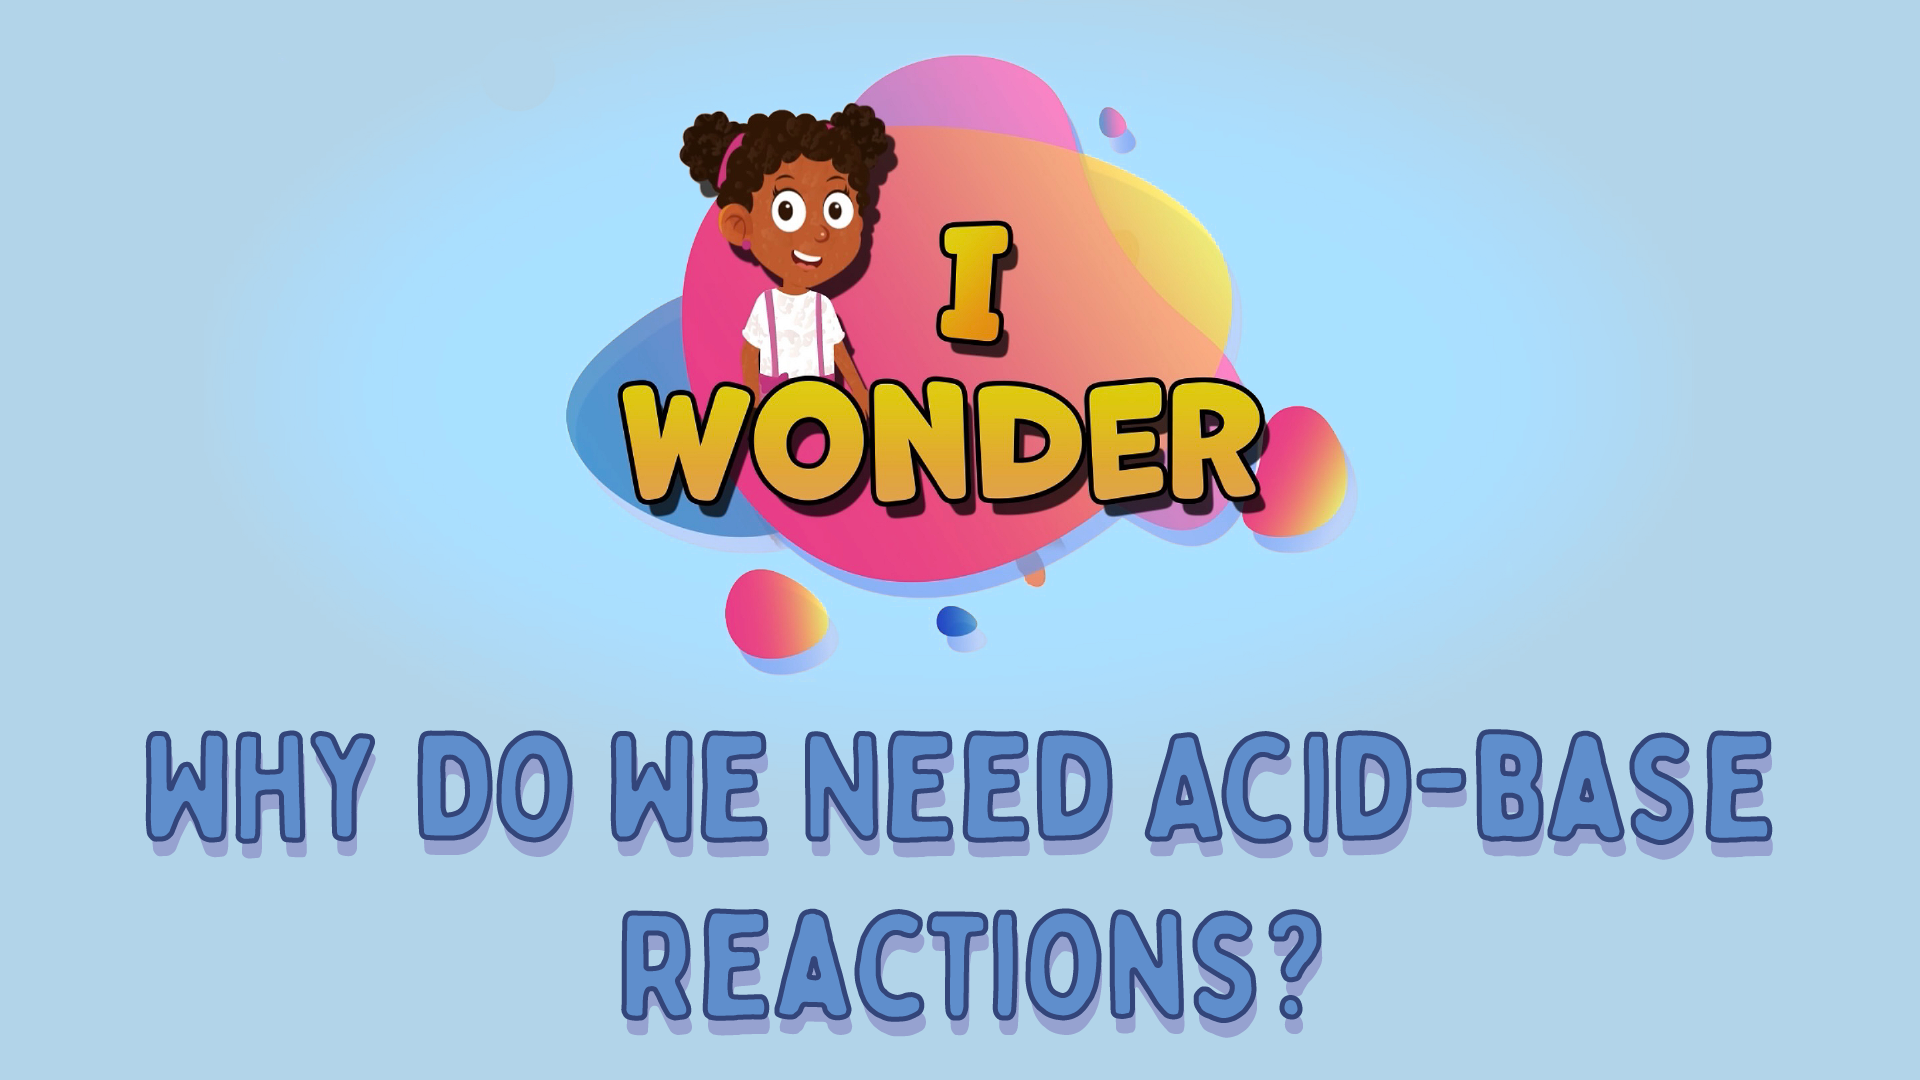 Why Do We Need Acid-base Reactions?